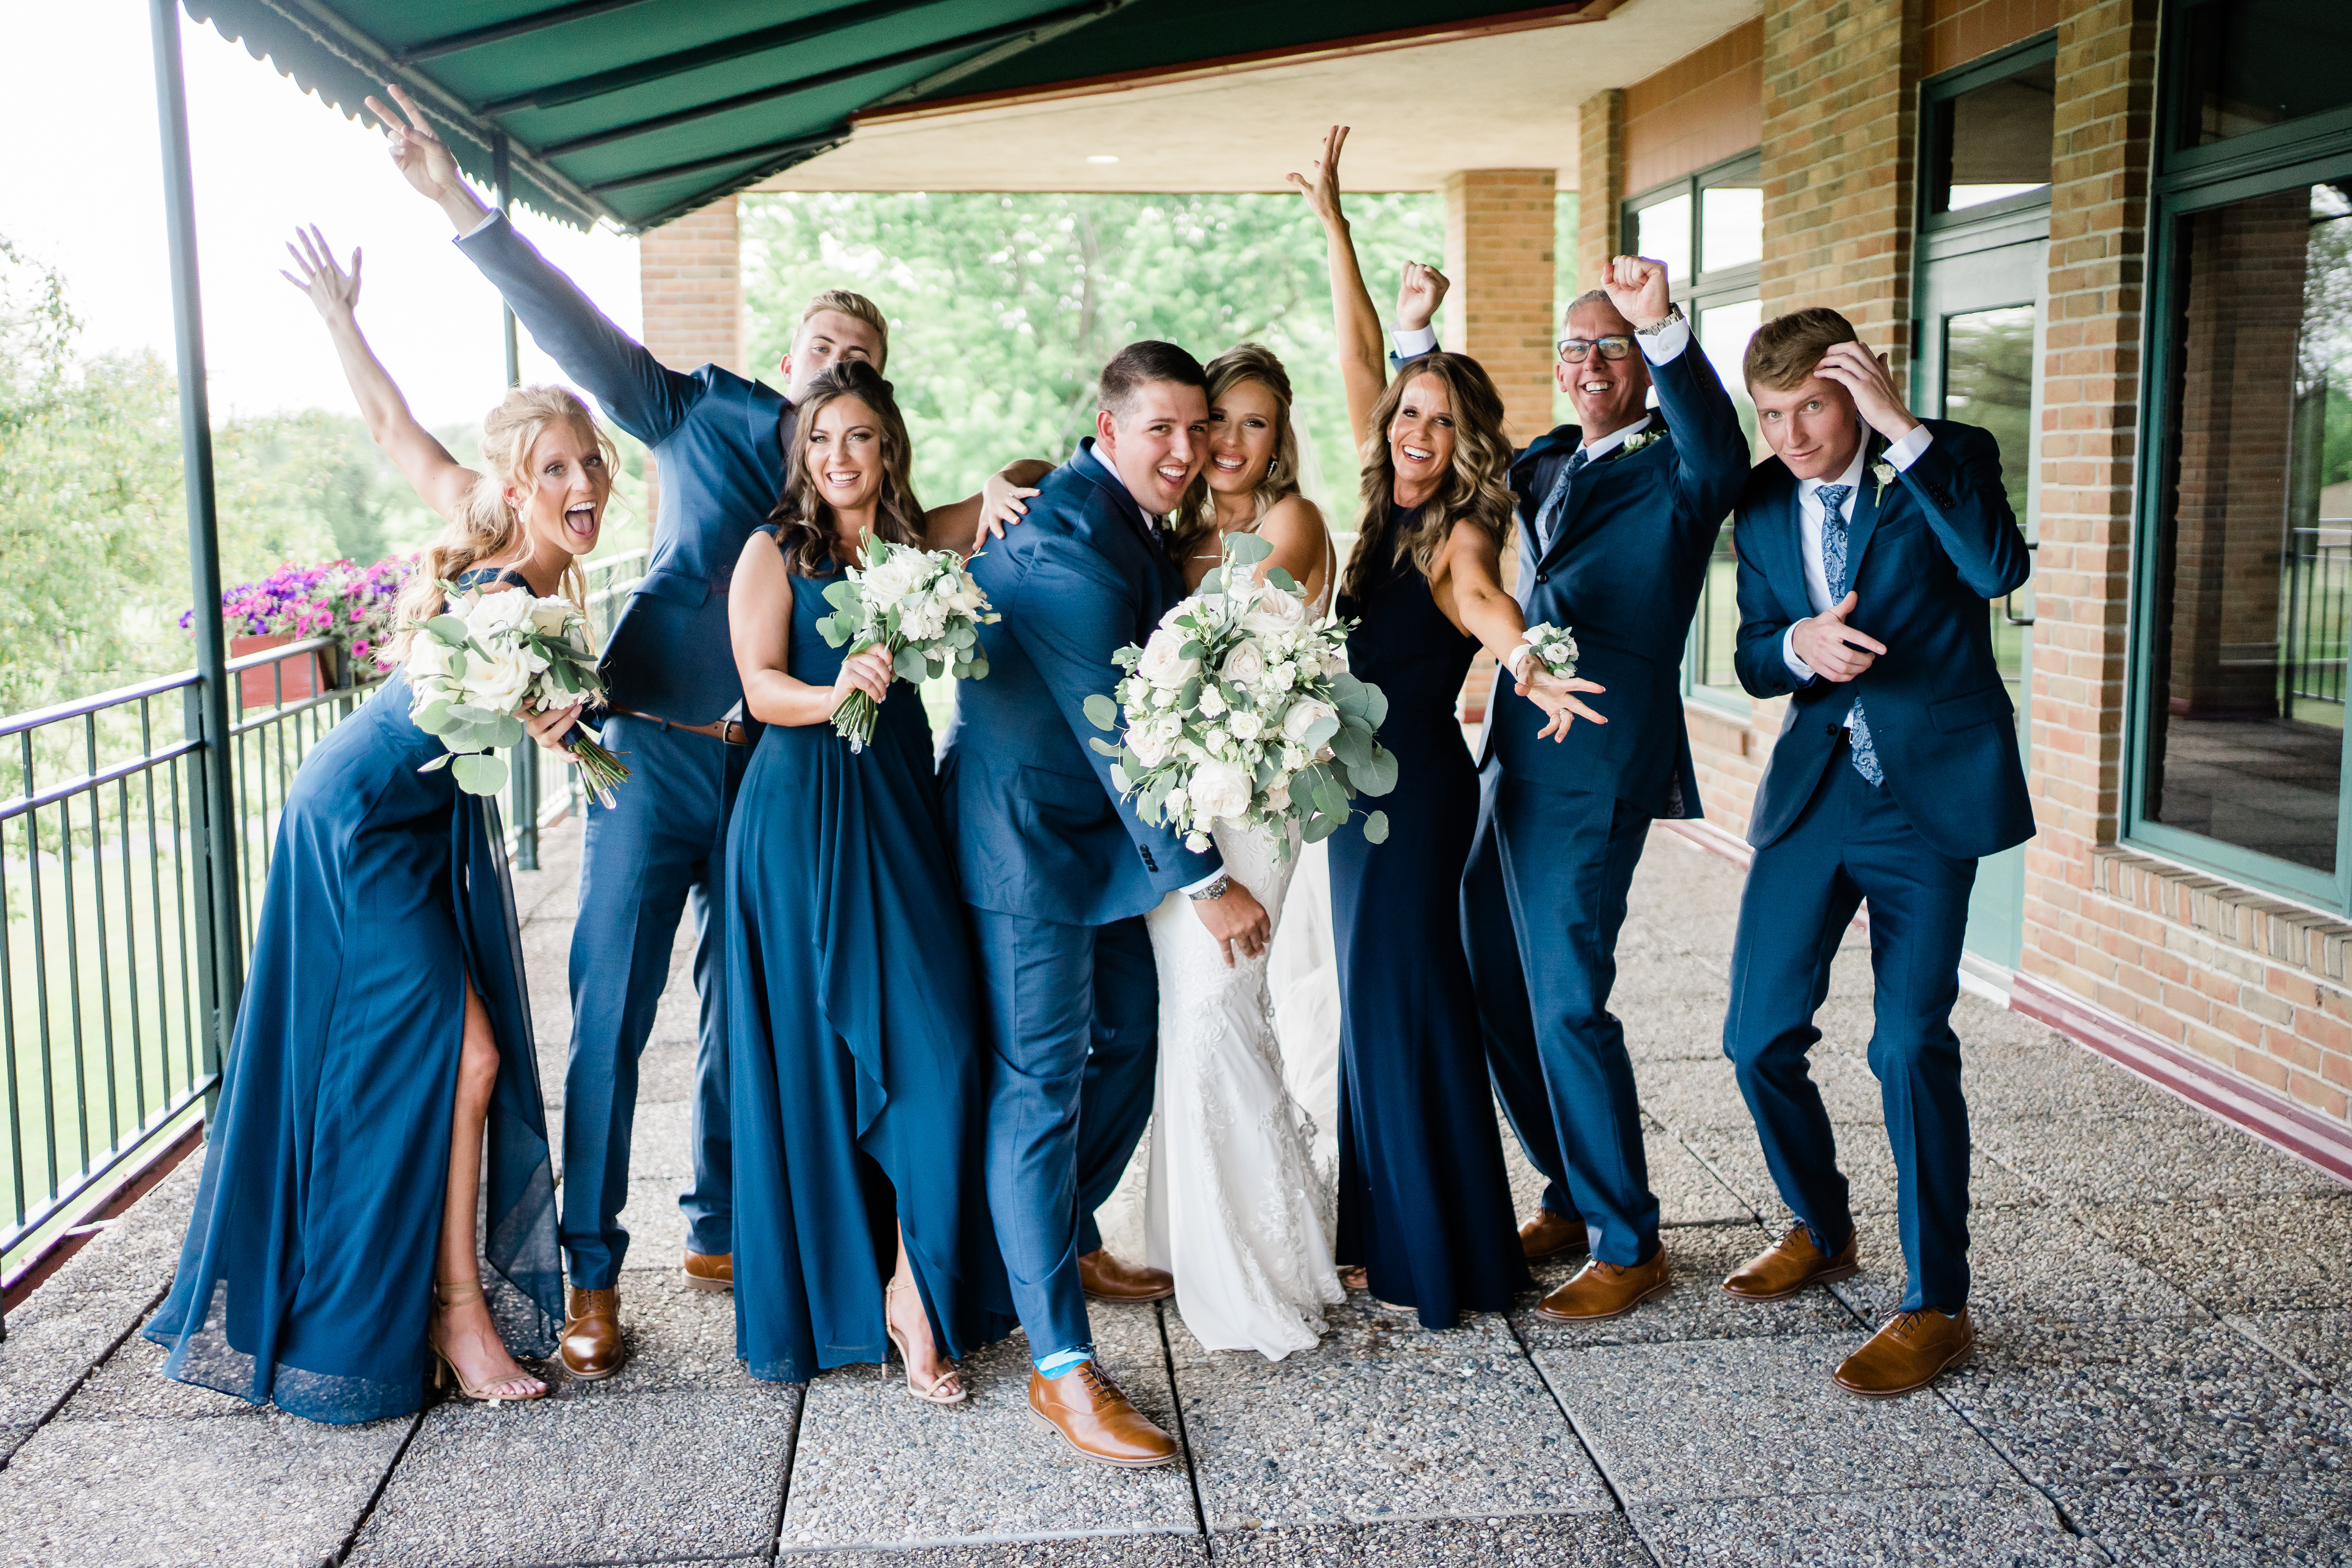 Fort Wayne wedding photographers capture bridal party celebrating bride and groom